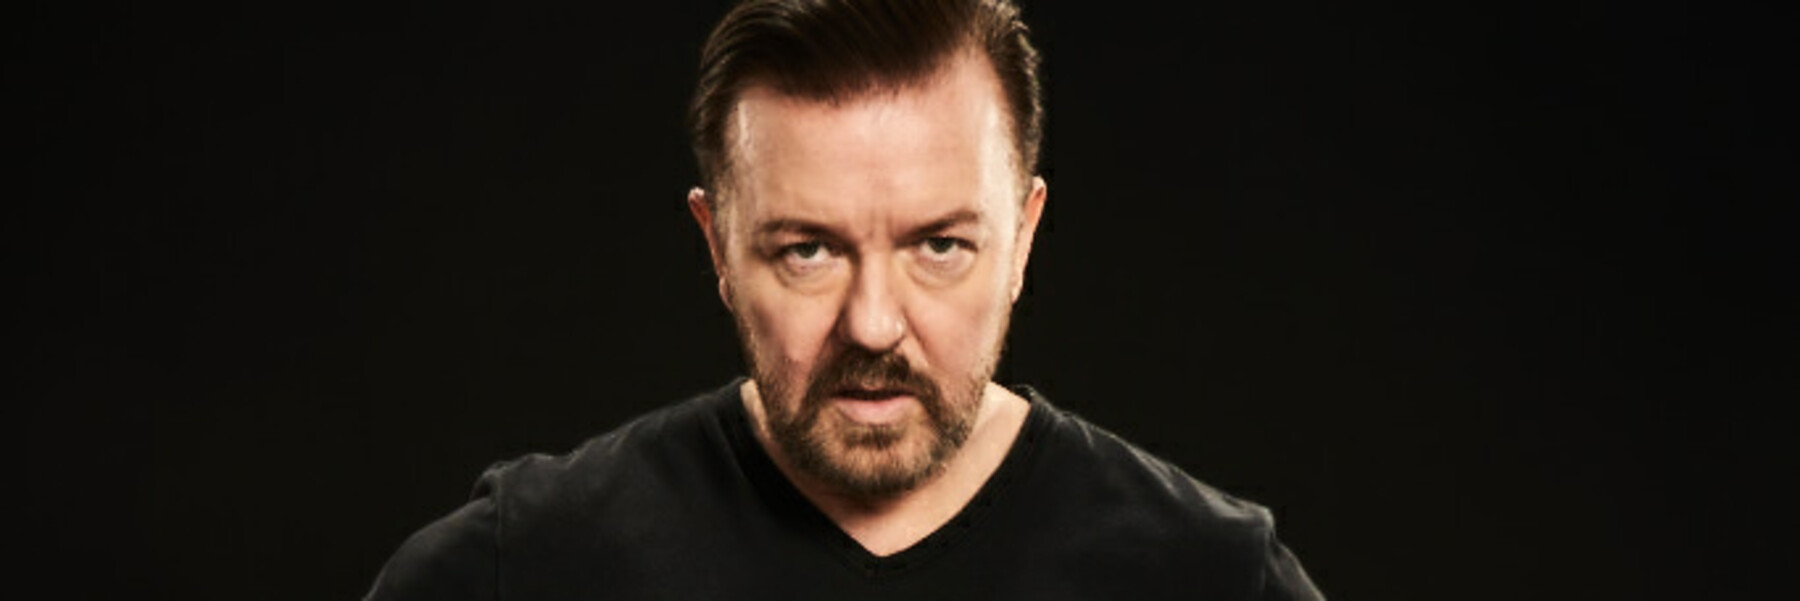 Ricky Gervais live on the Samsung Hall Zürich stage, Friday, 17 January 2020.